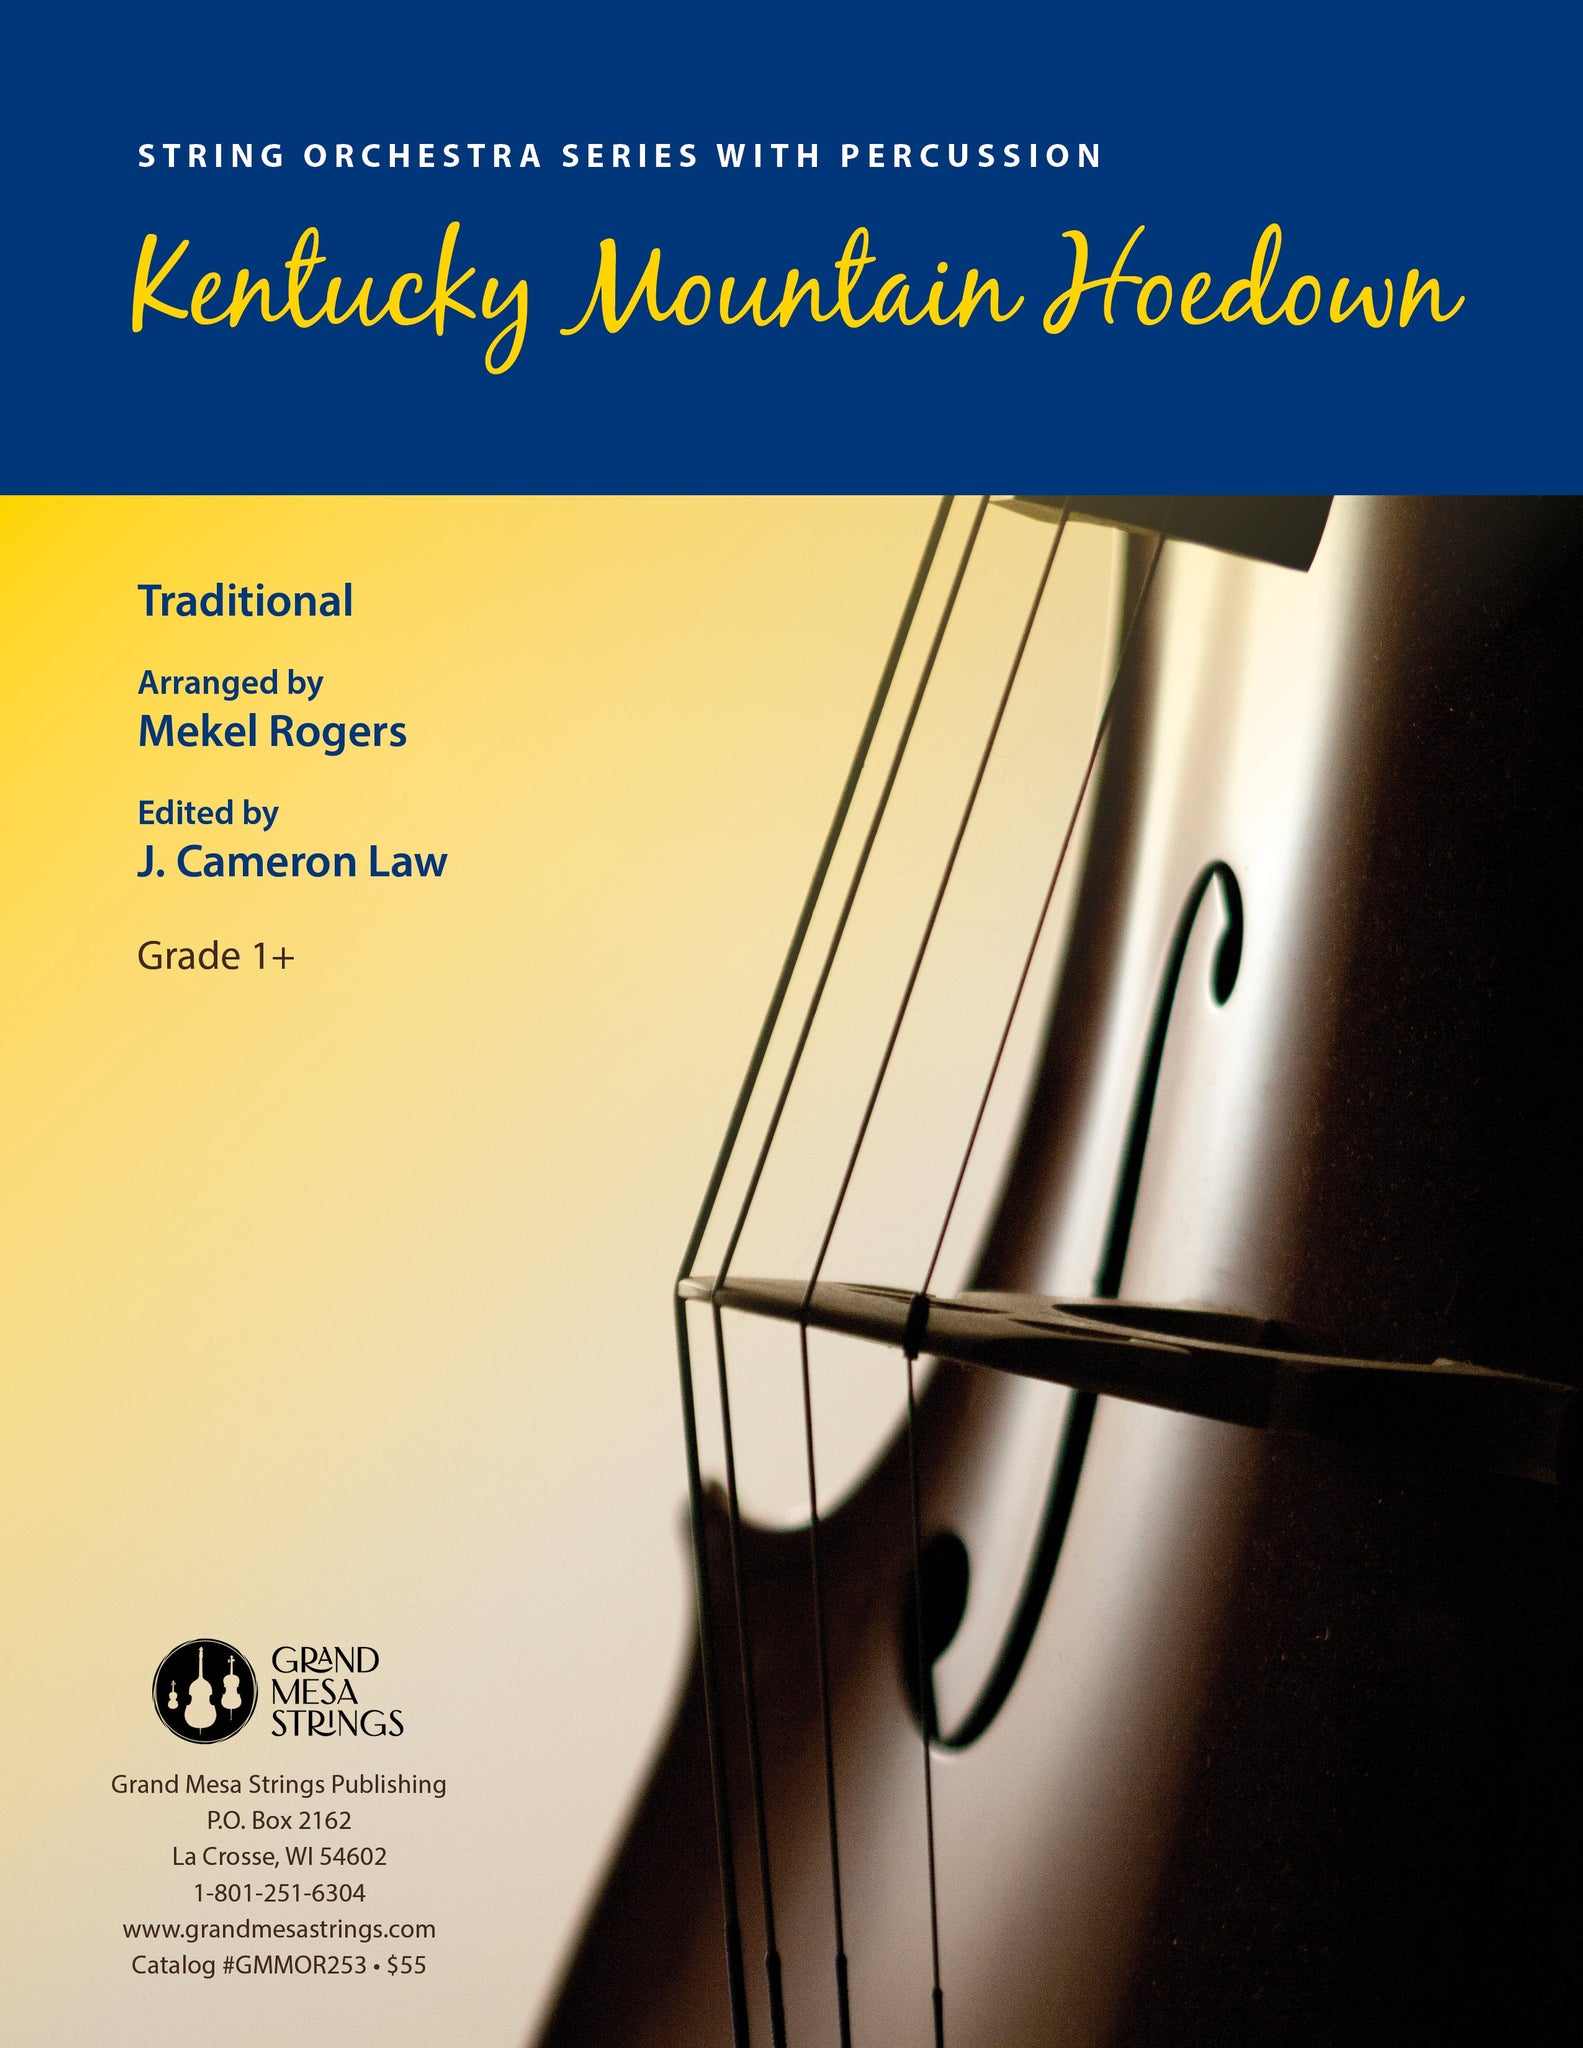 Strings sheet music cover of Kentucky Mountain Hoedown, arranged by Mekel Rogers.